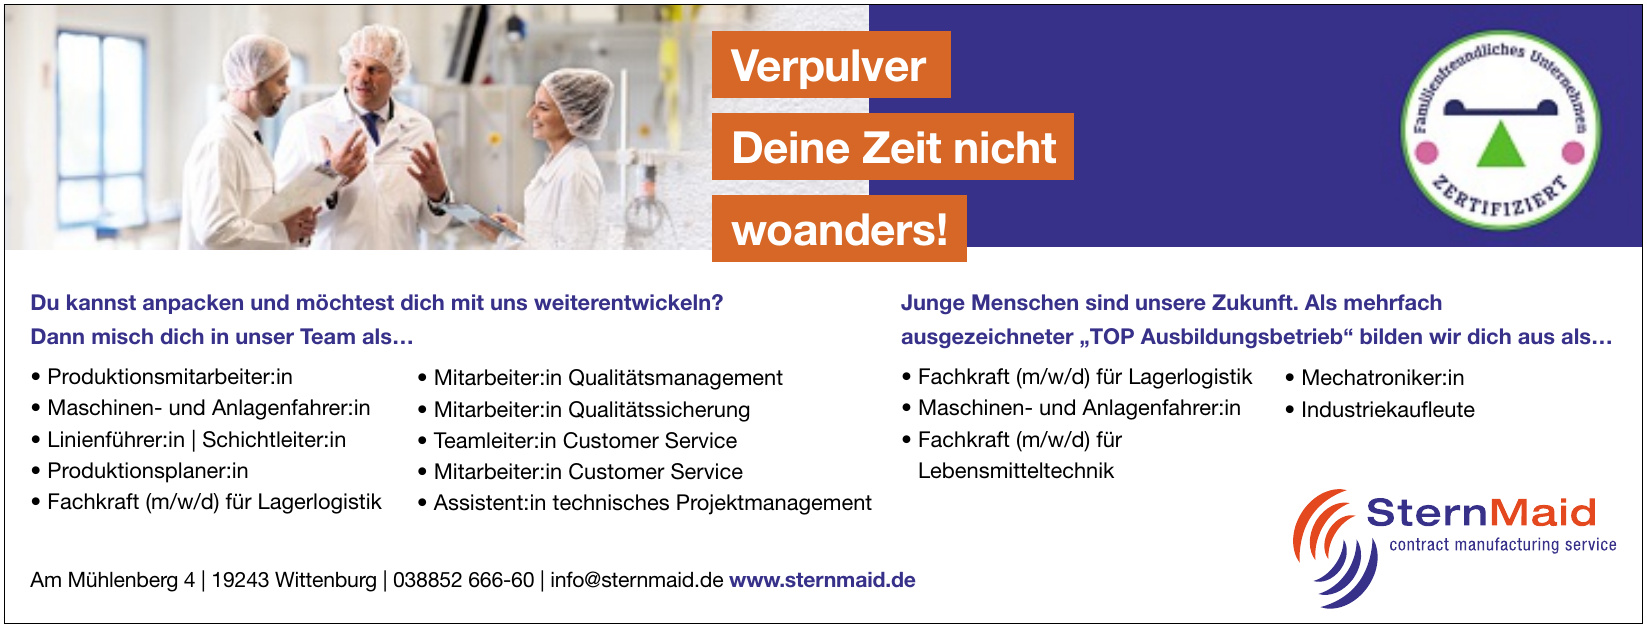 SternMaid GmbH & Co. KG